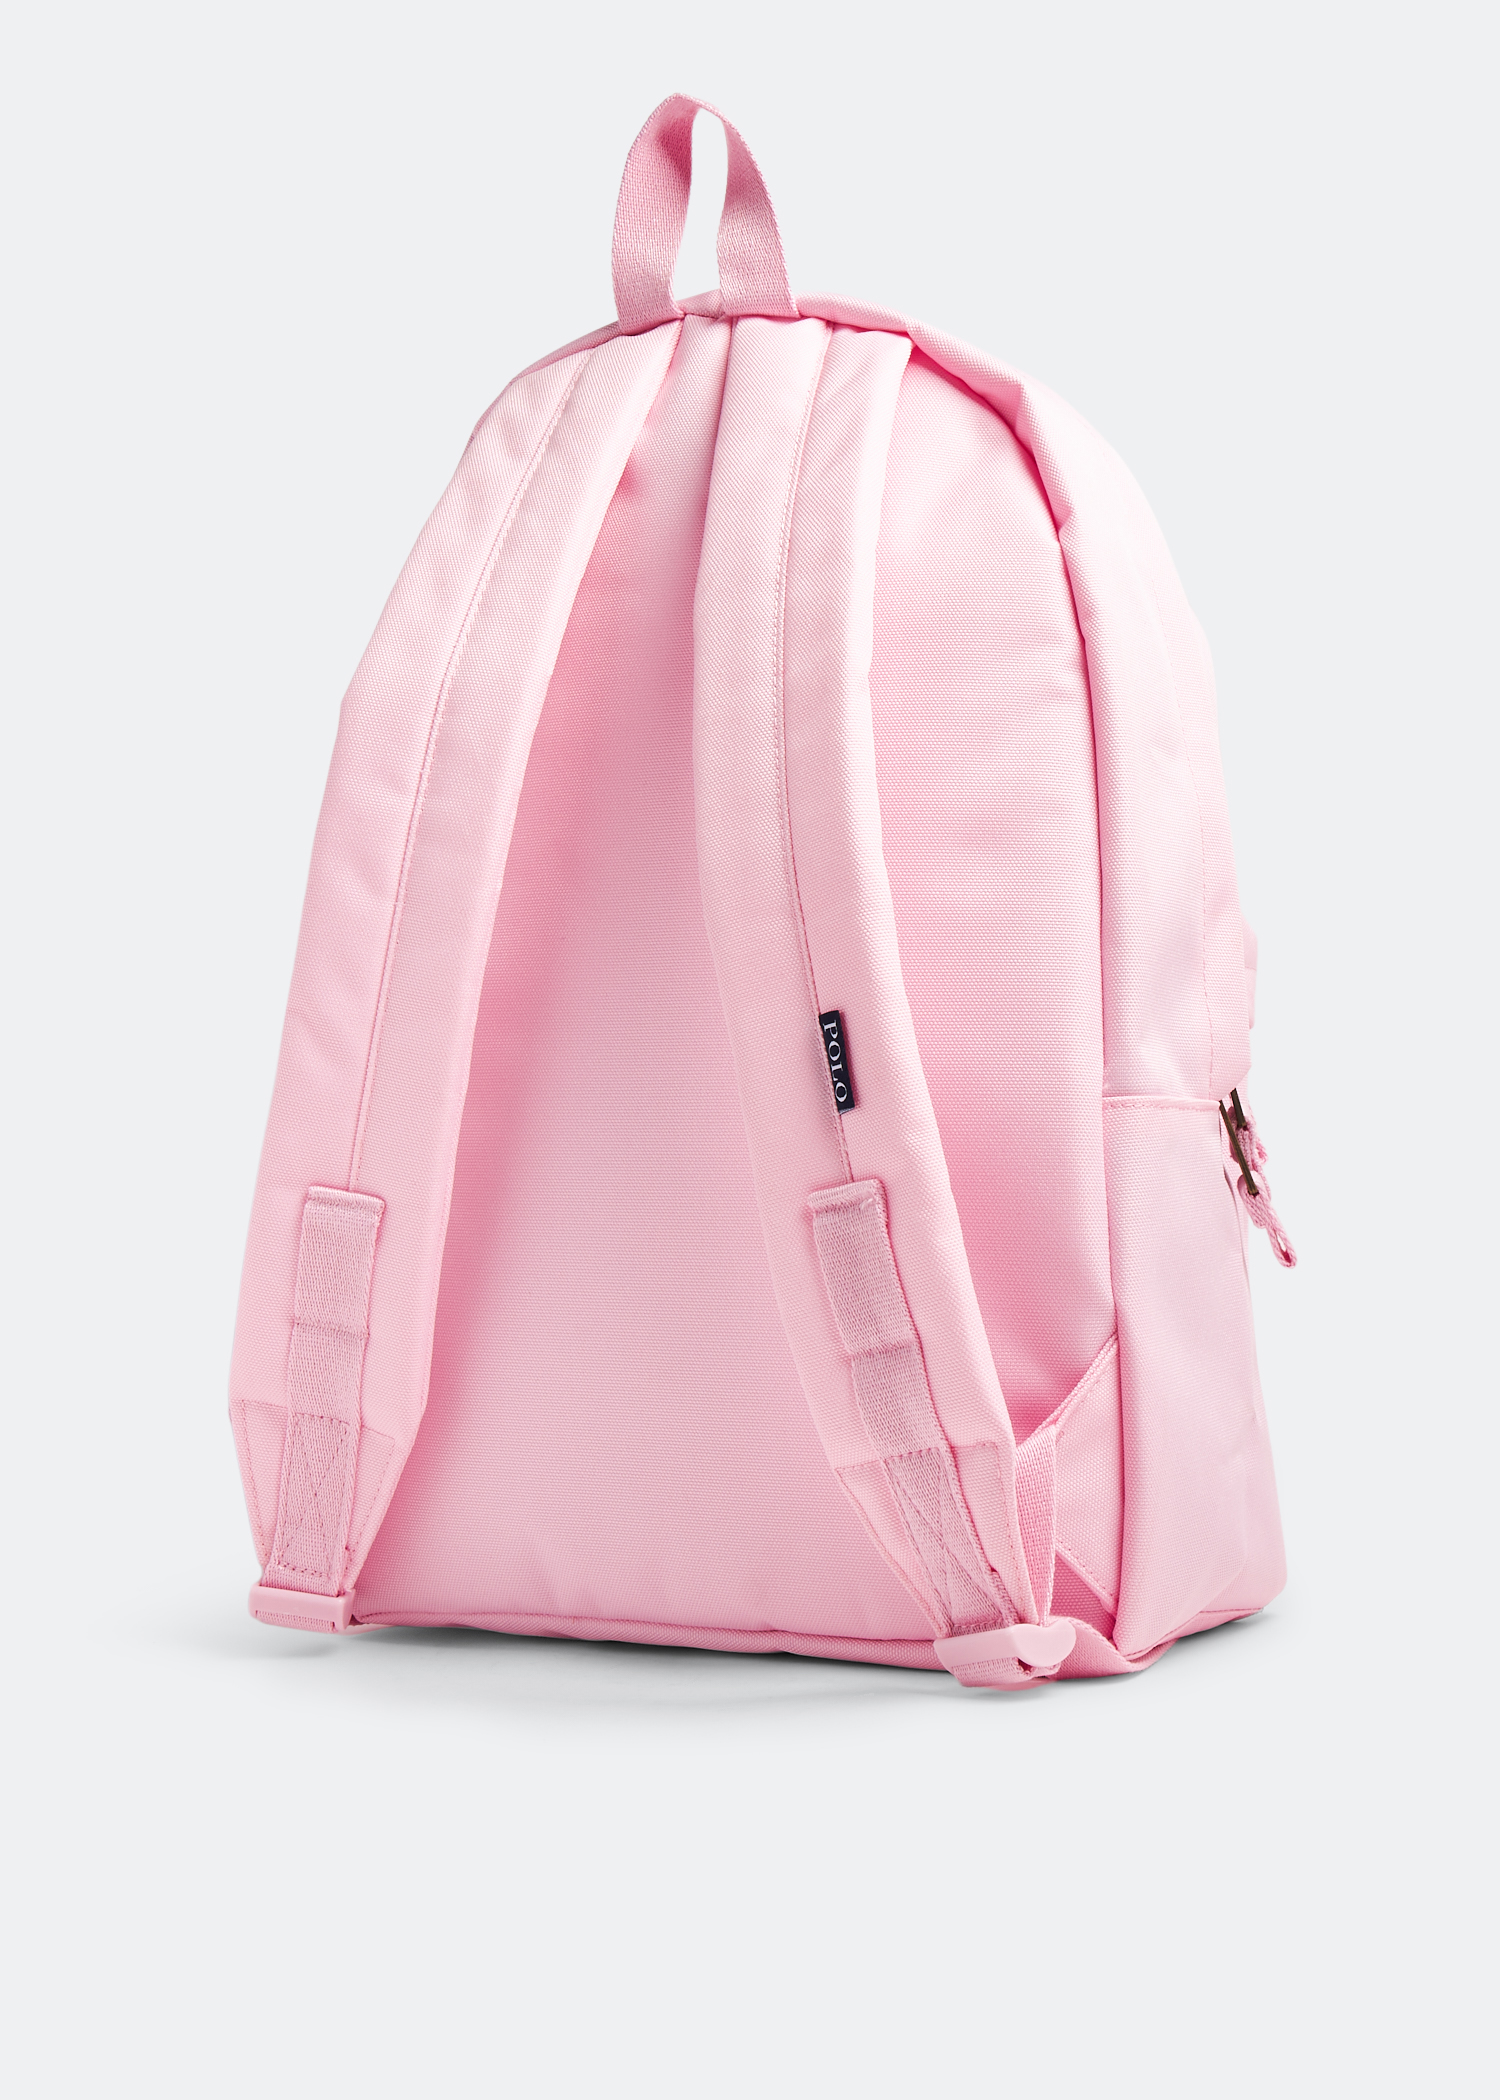 Polo Ralph Lauren Polo Bear backpack for Girl - Pink in Bahrain